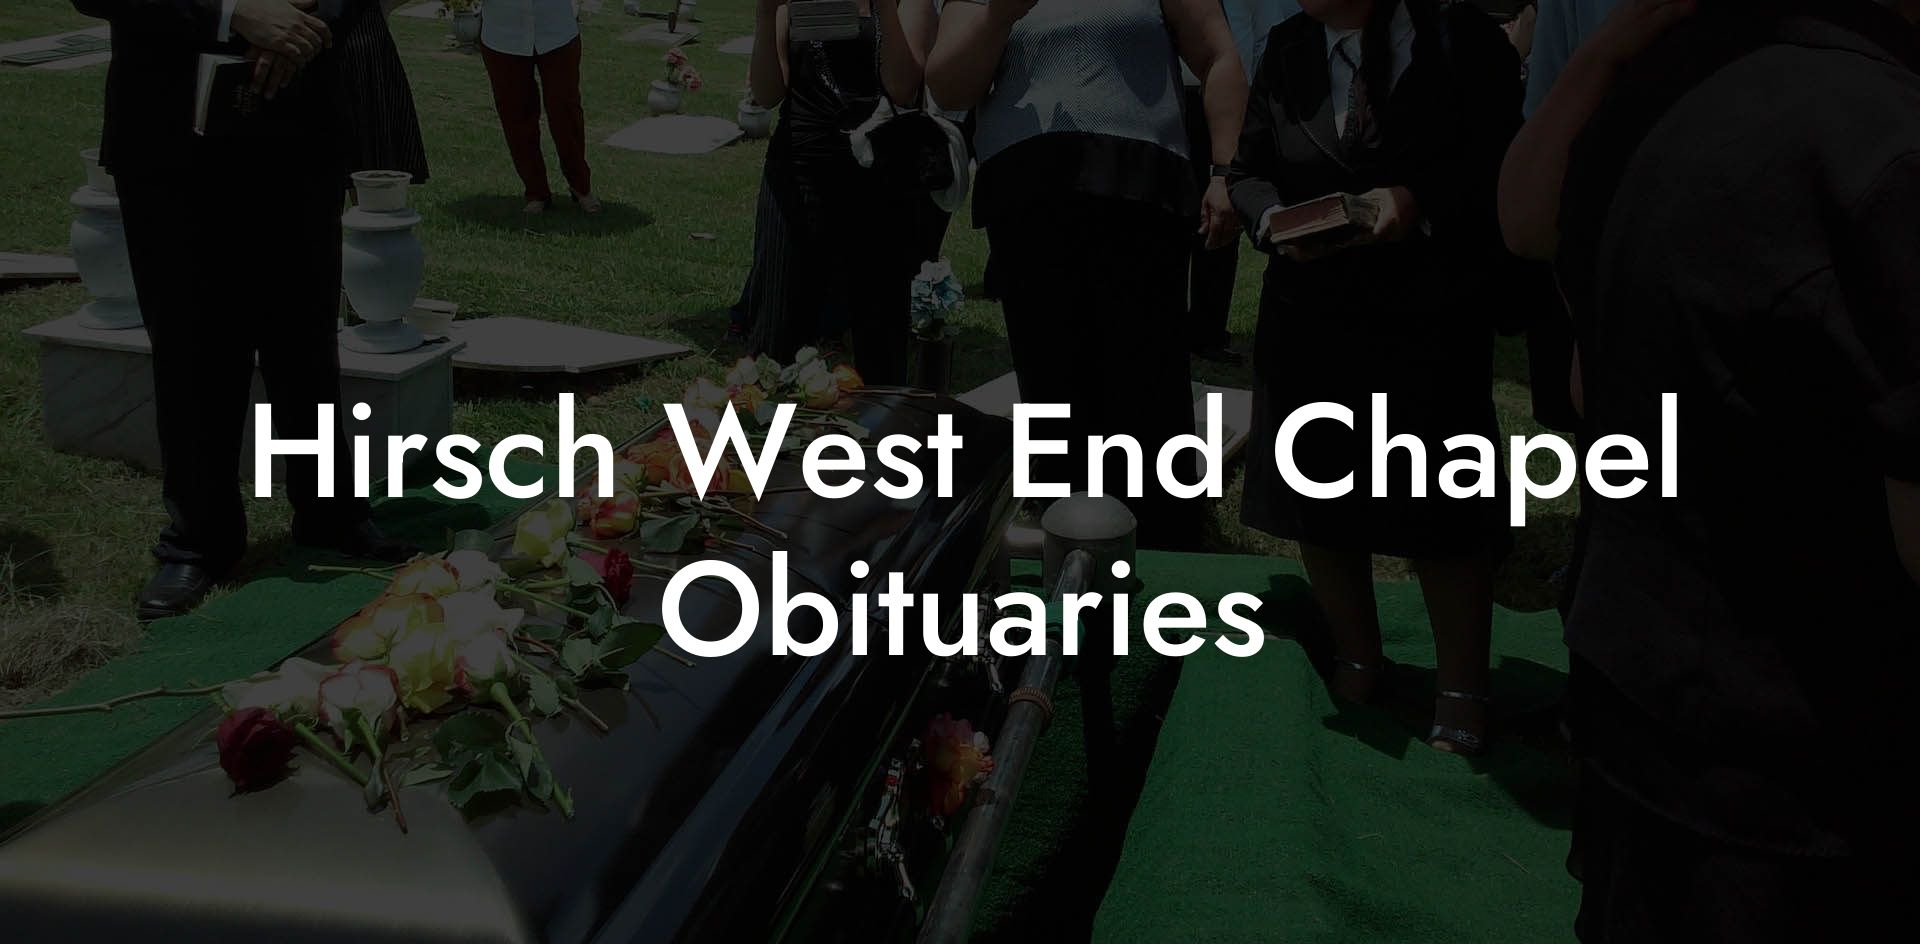 Hirsch West End Chapel Obituaries